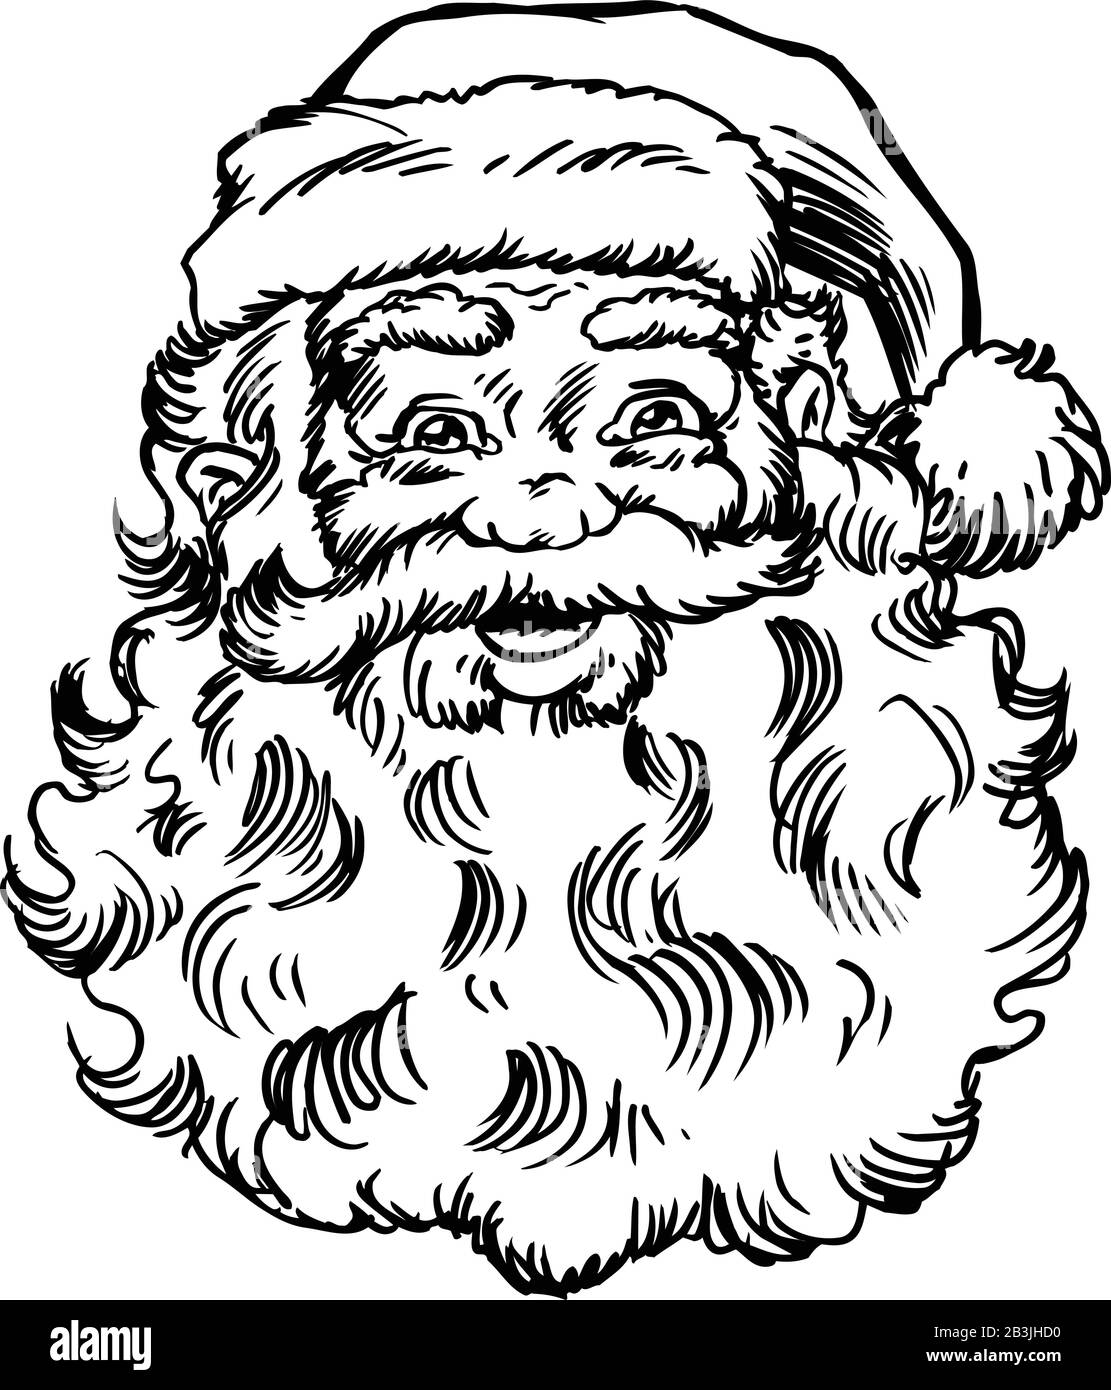 Santa Claus Face and Head Cartoon Vector Illustration Stock Vector Image &  Art - Alamy